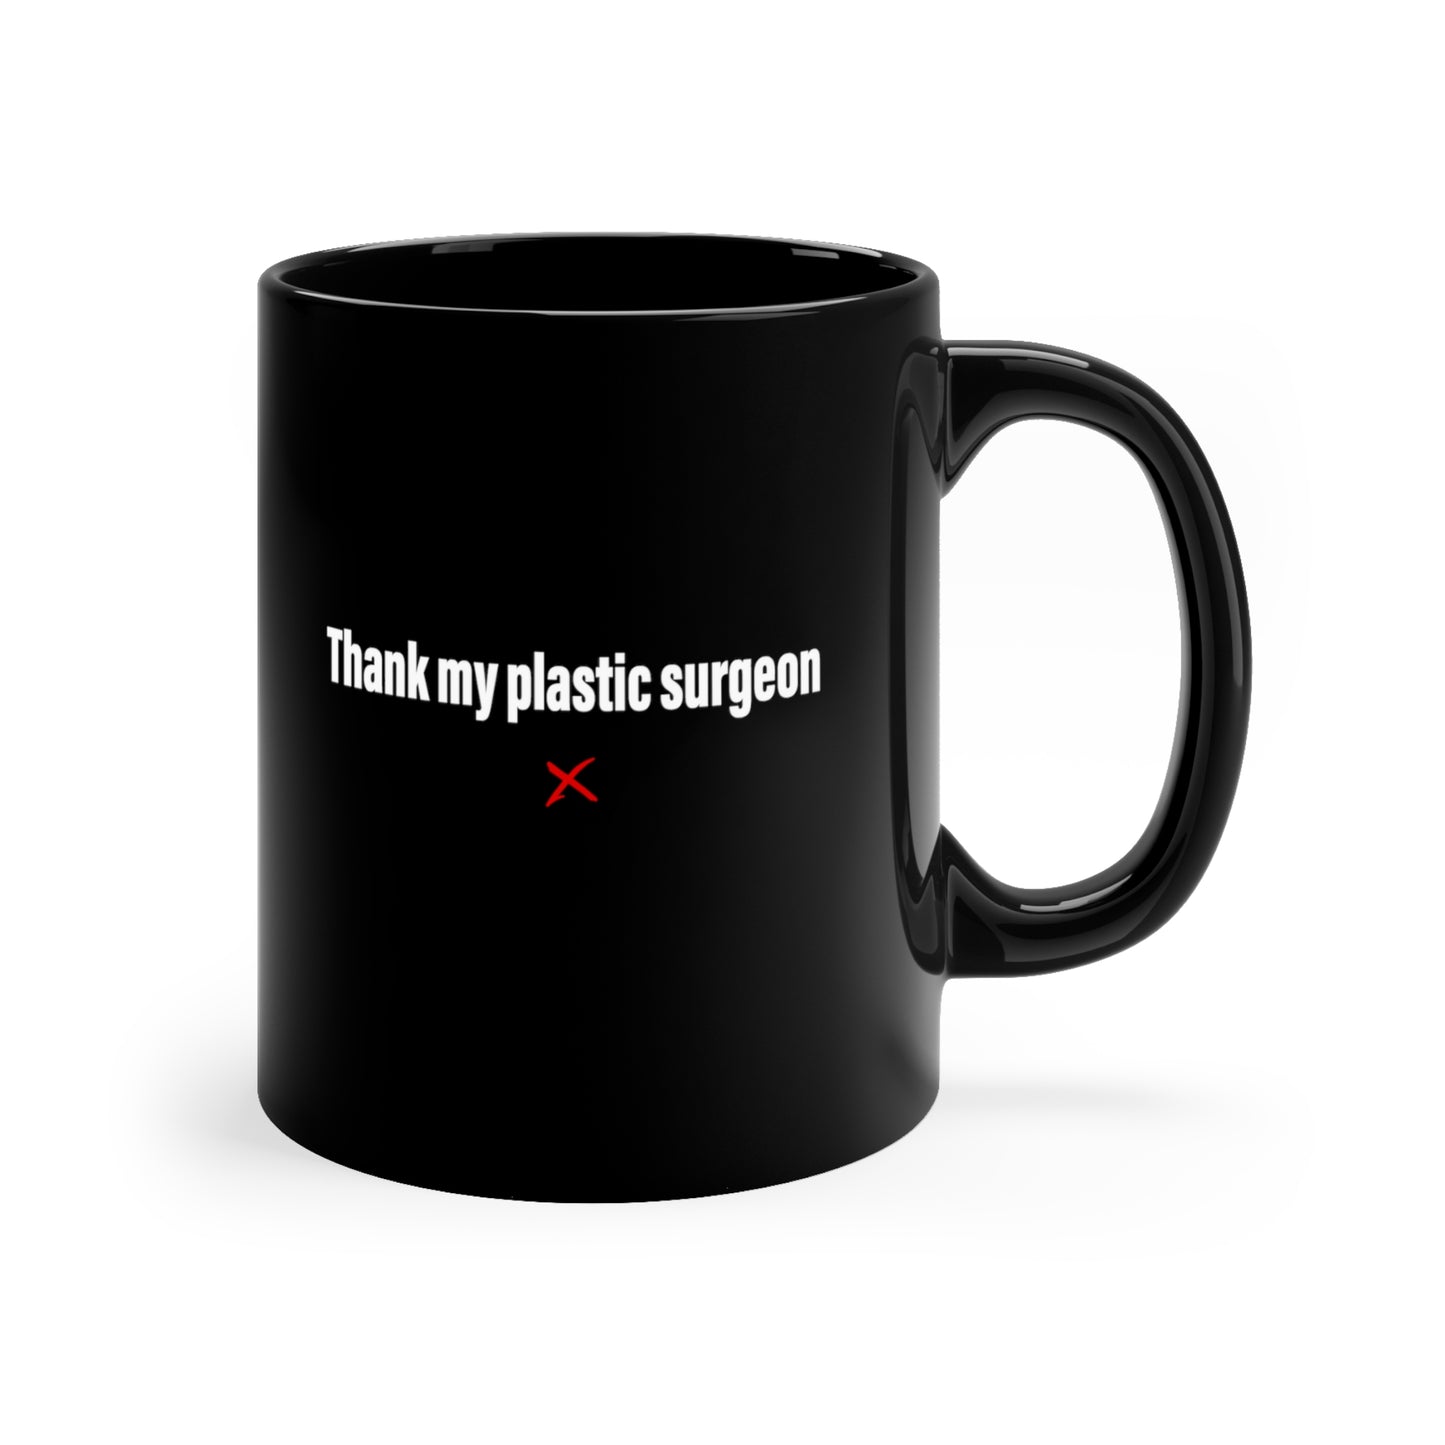 Thank my plastic surgeon - Mug